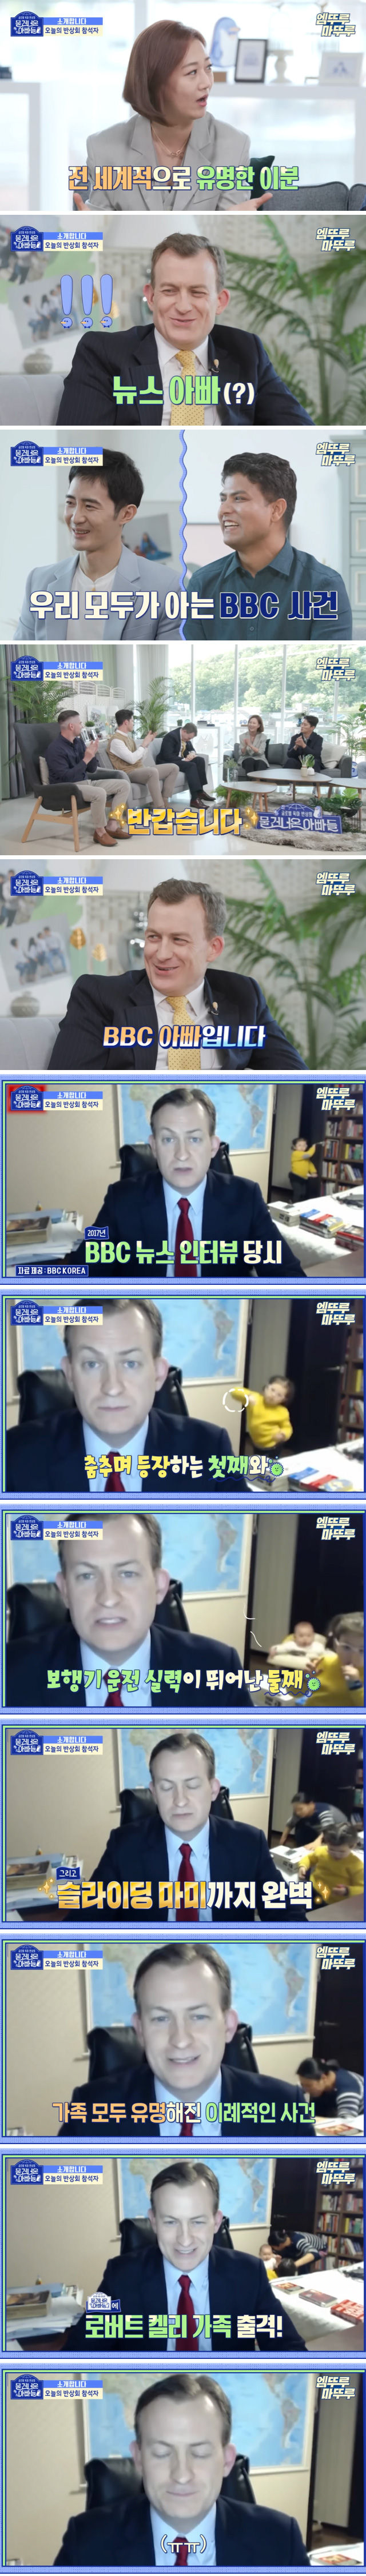 BBC로 유명해진 한국 아기들 근황